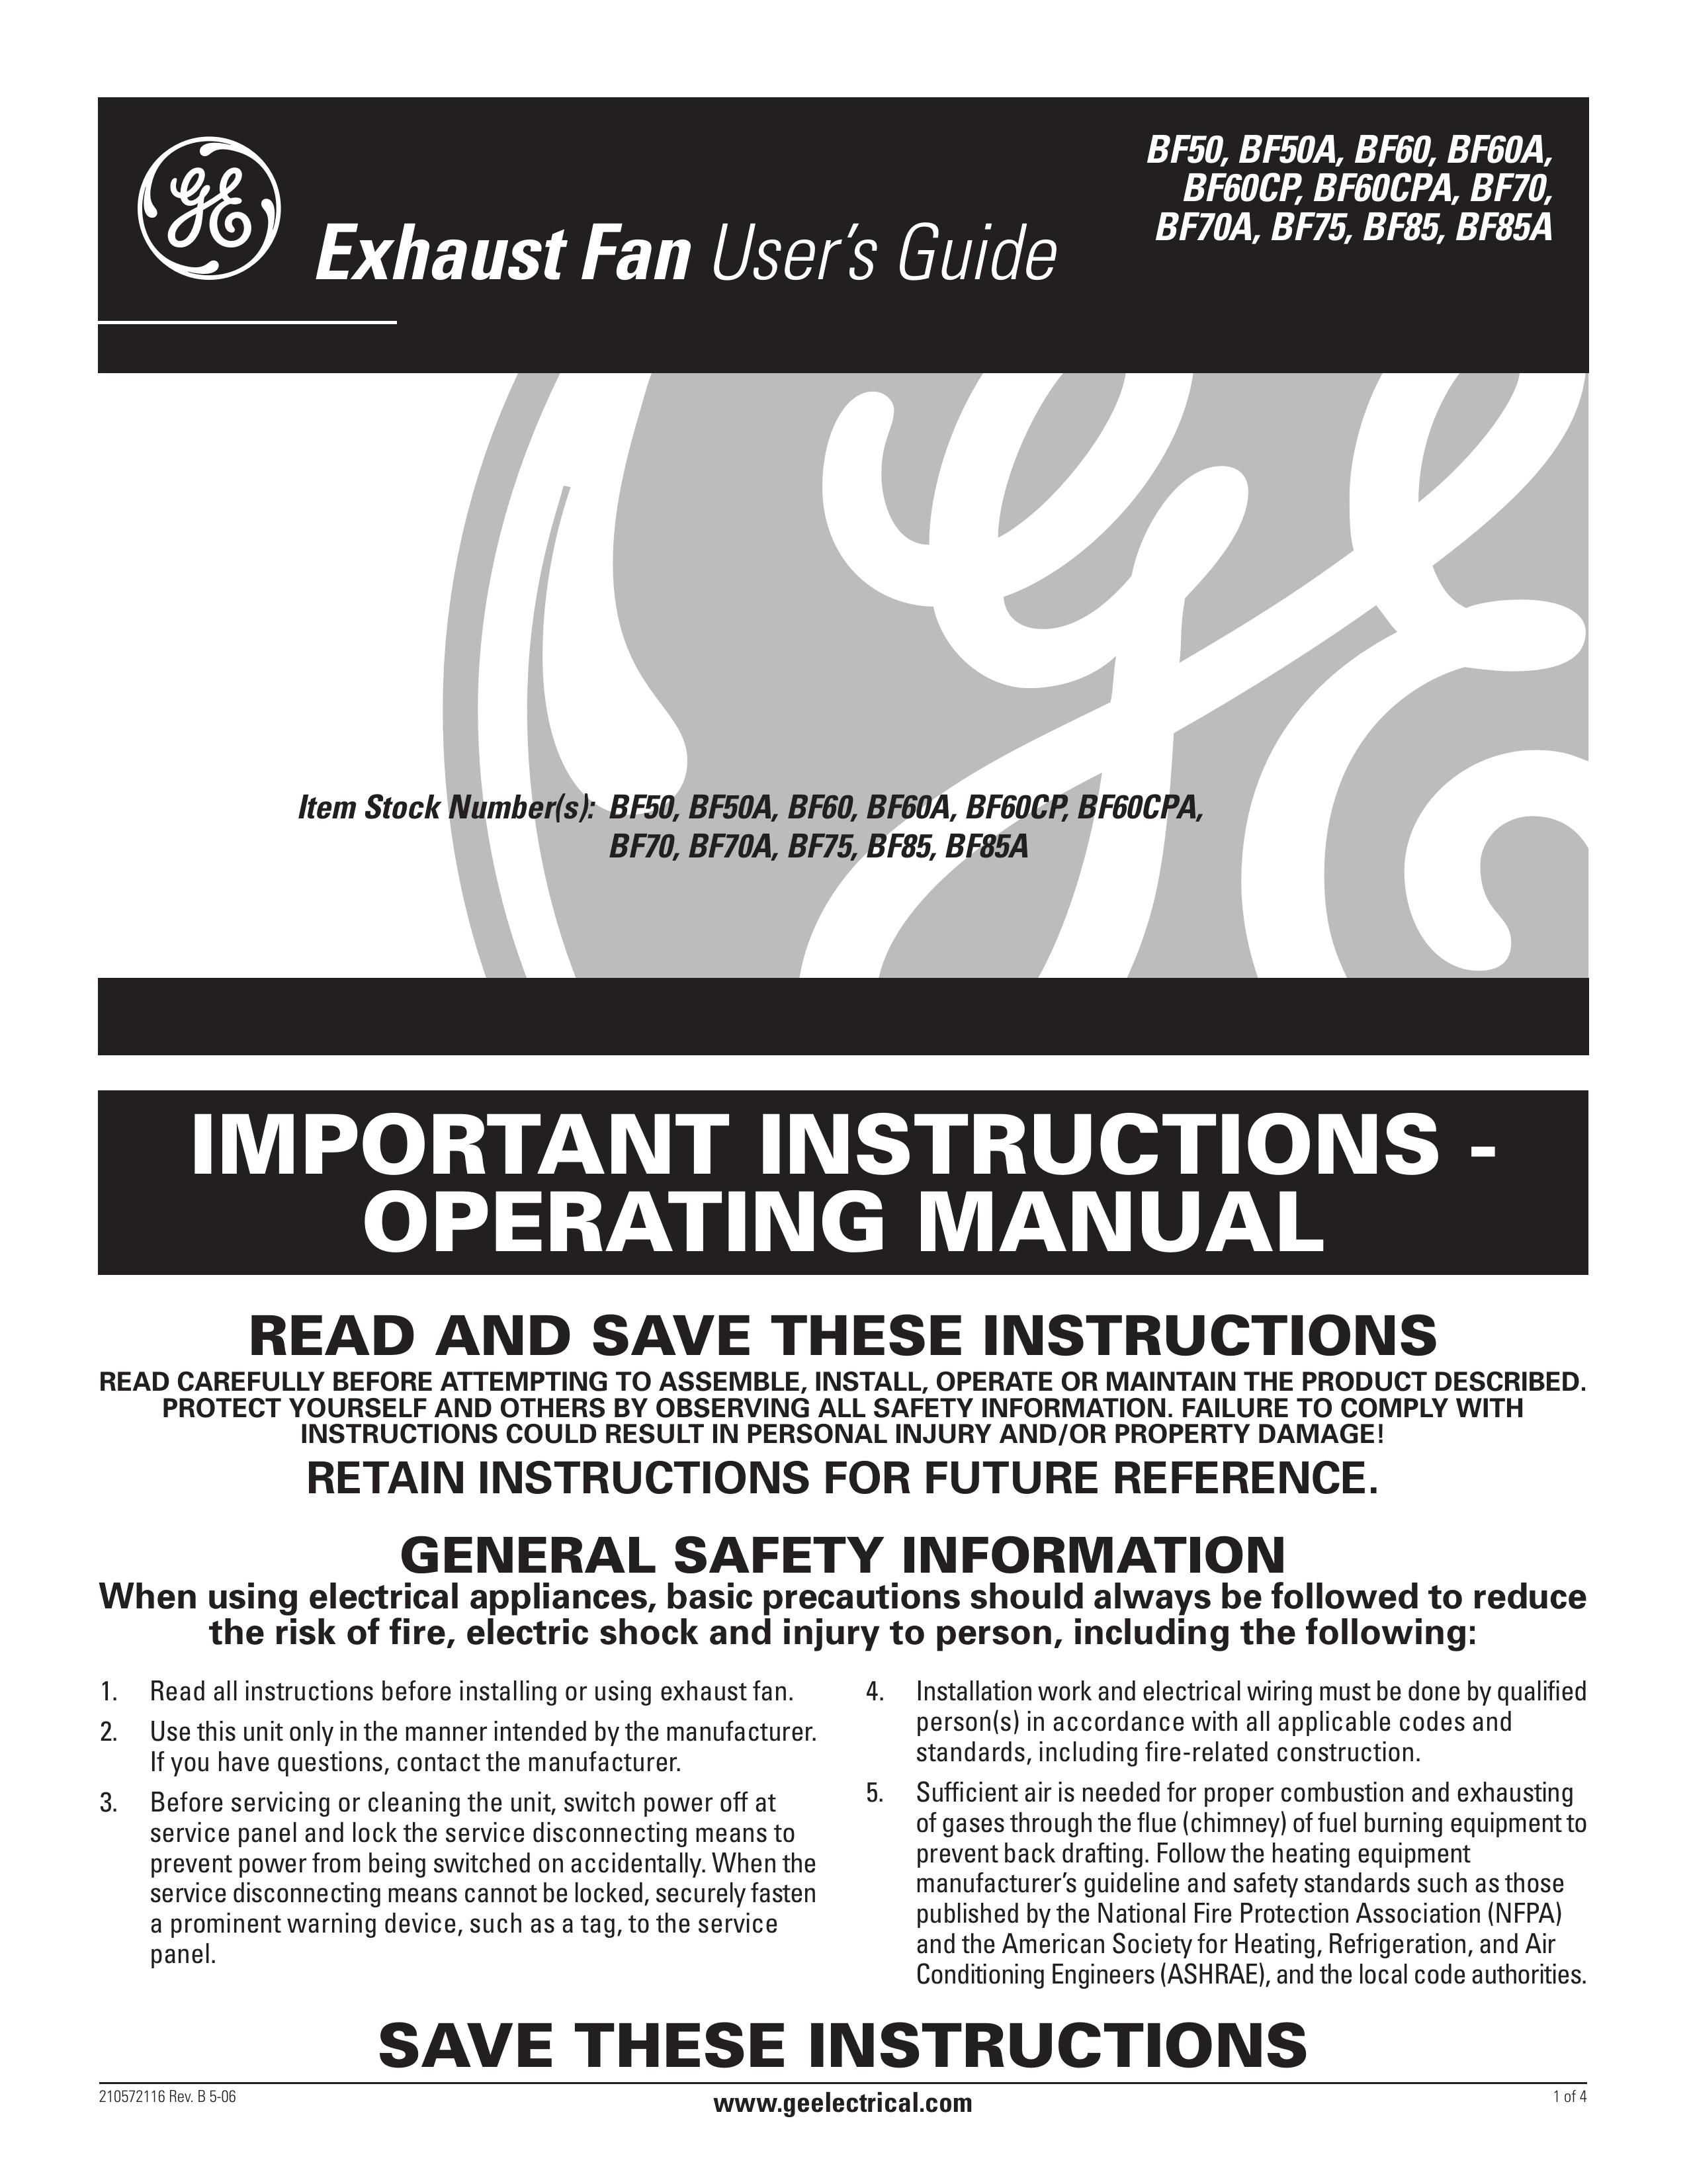 GE BF85A Ventilation Hood User Manual